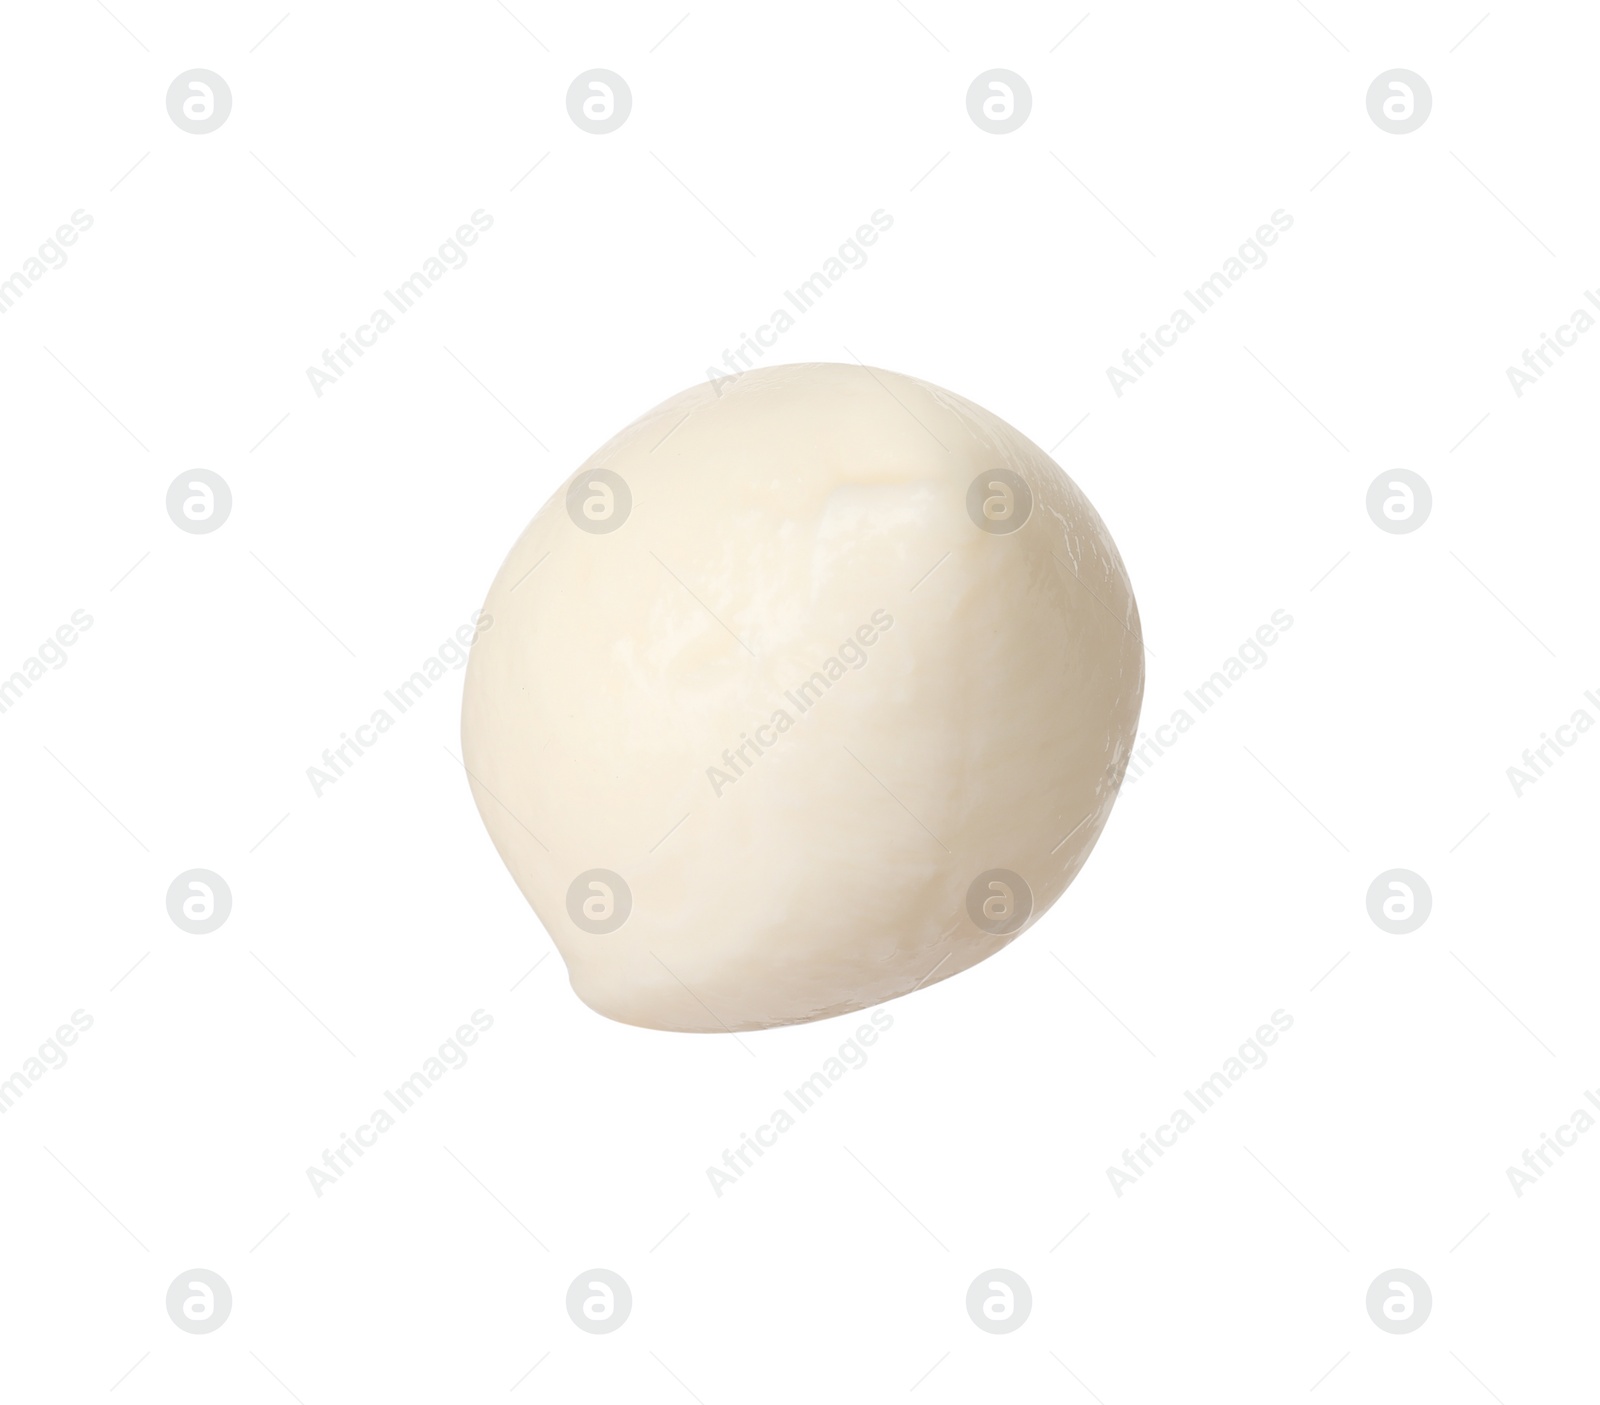 Photo of One ball of mozzarella cheese isolated on white